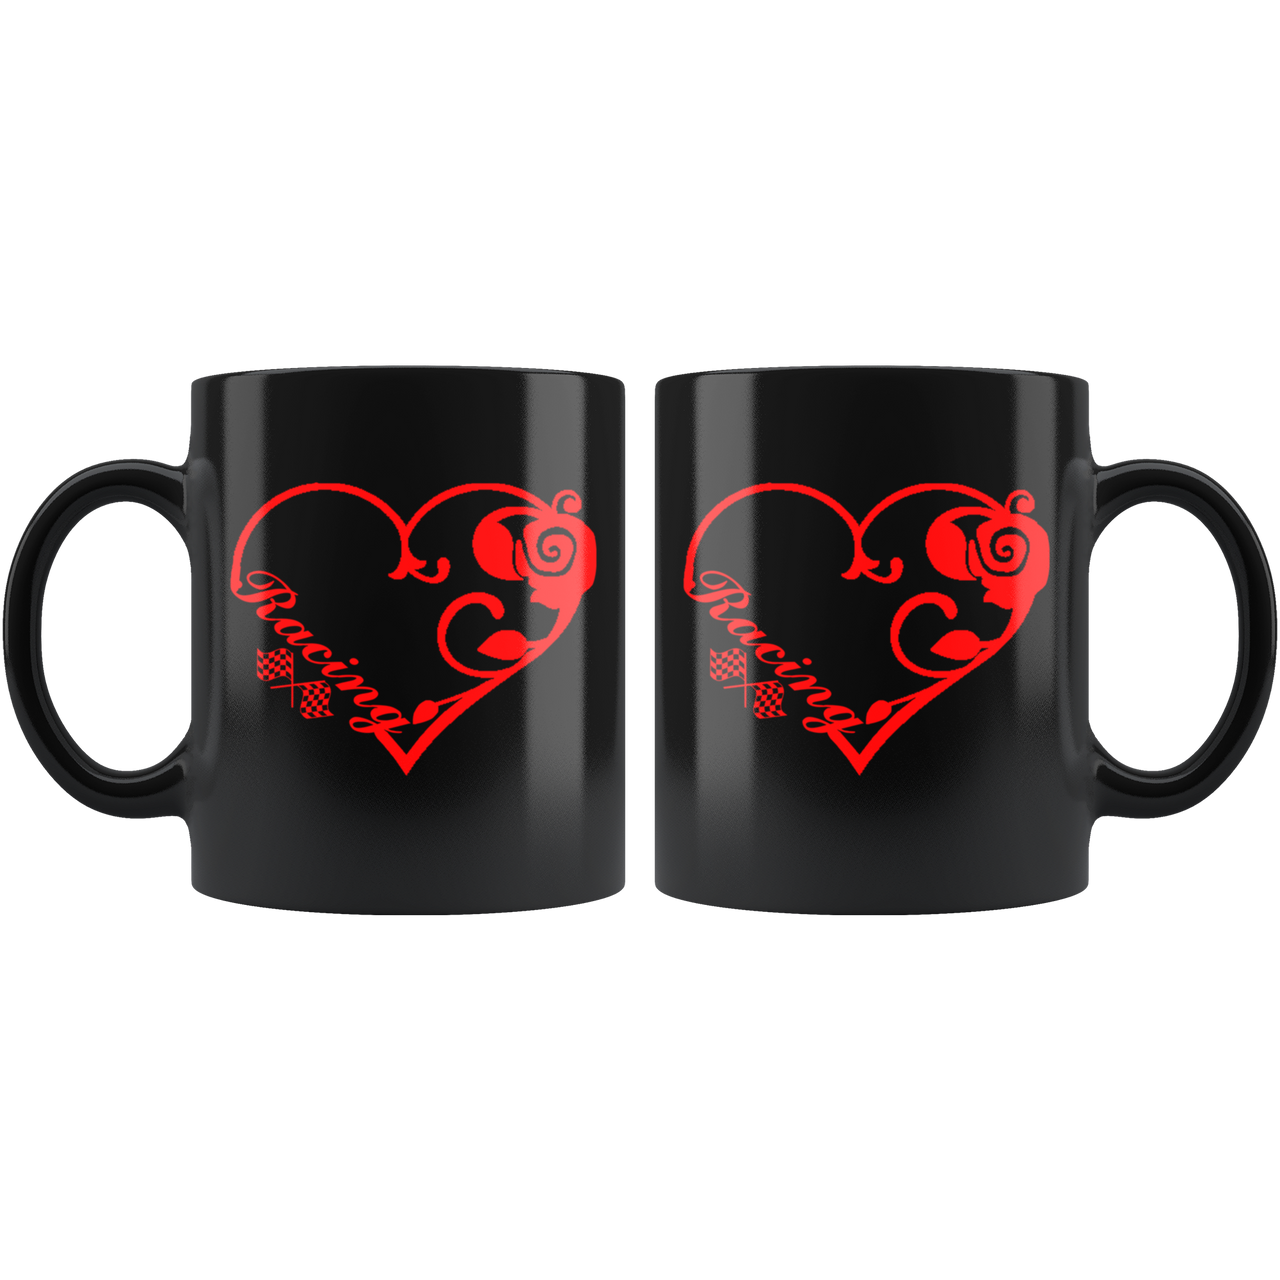 Racing Heart Red Mug!